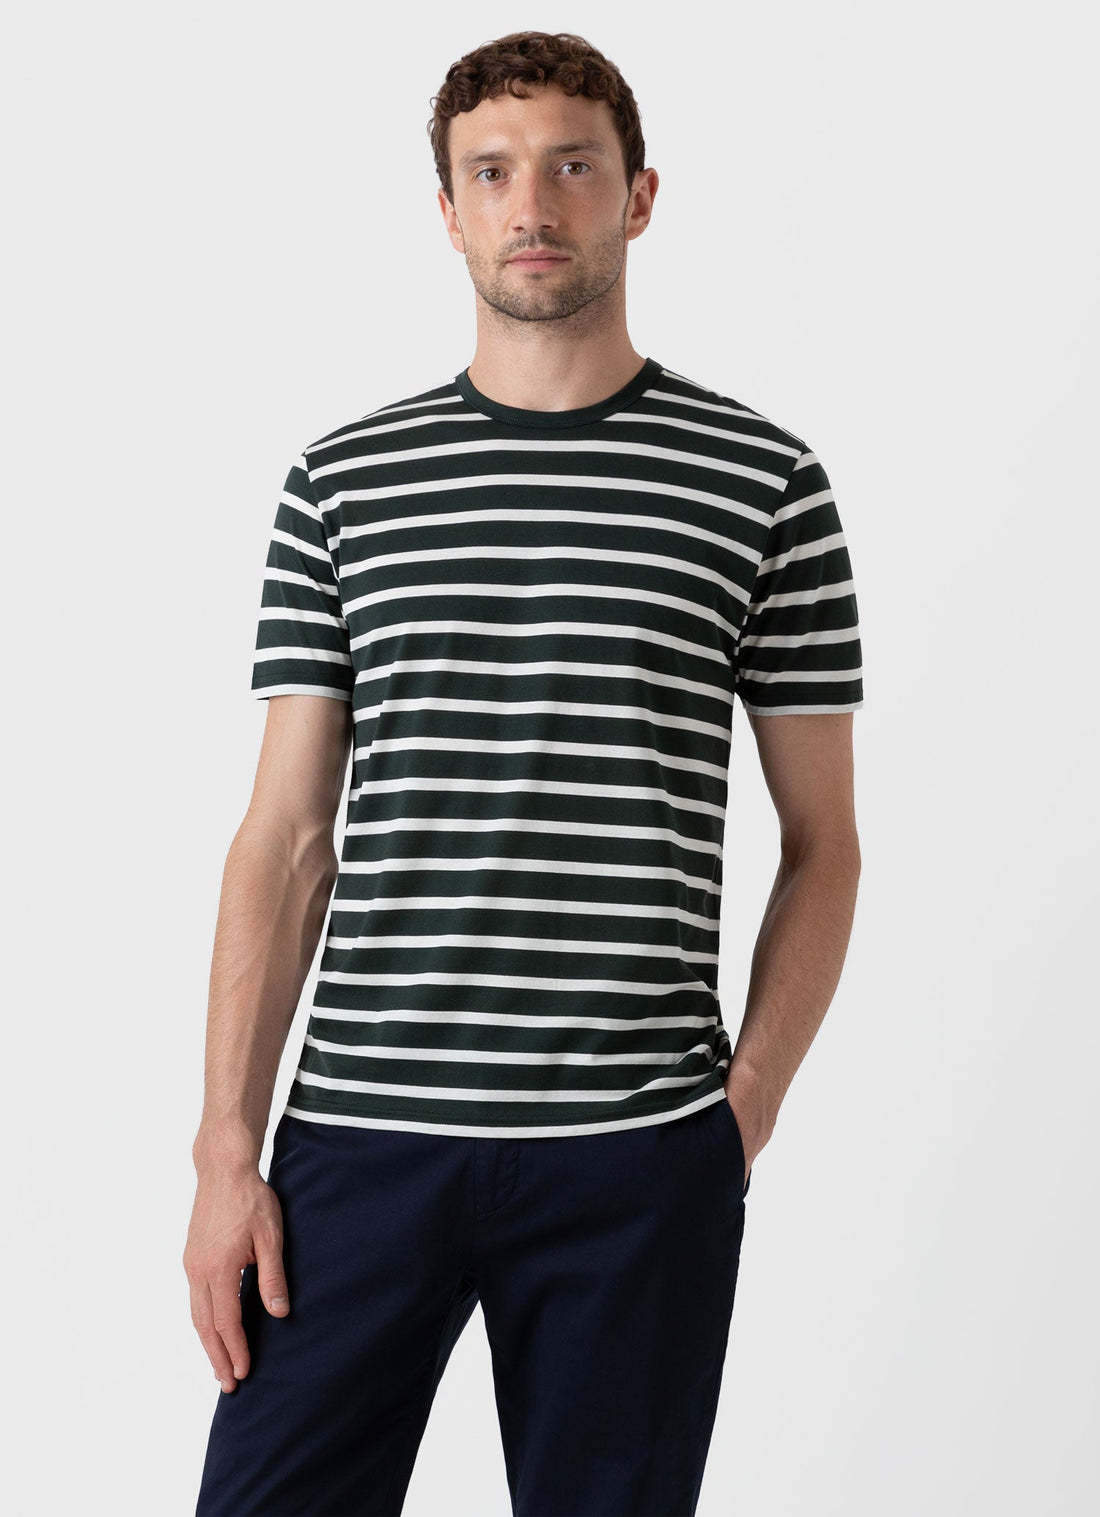 Men's Classic T-shirt in Seaweed/Ecru Breton Stripe